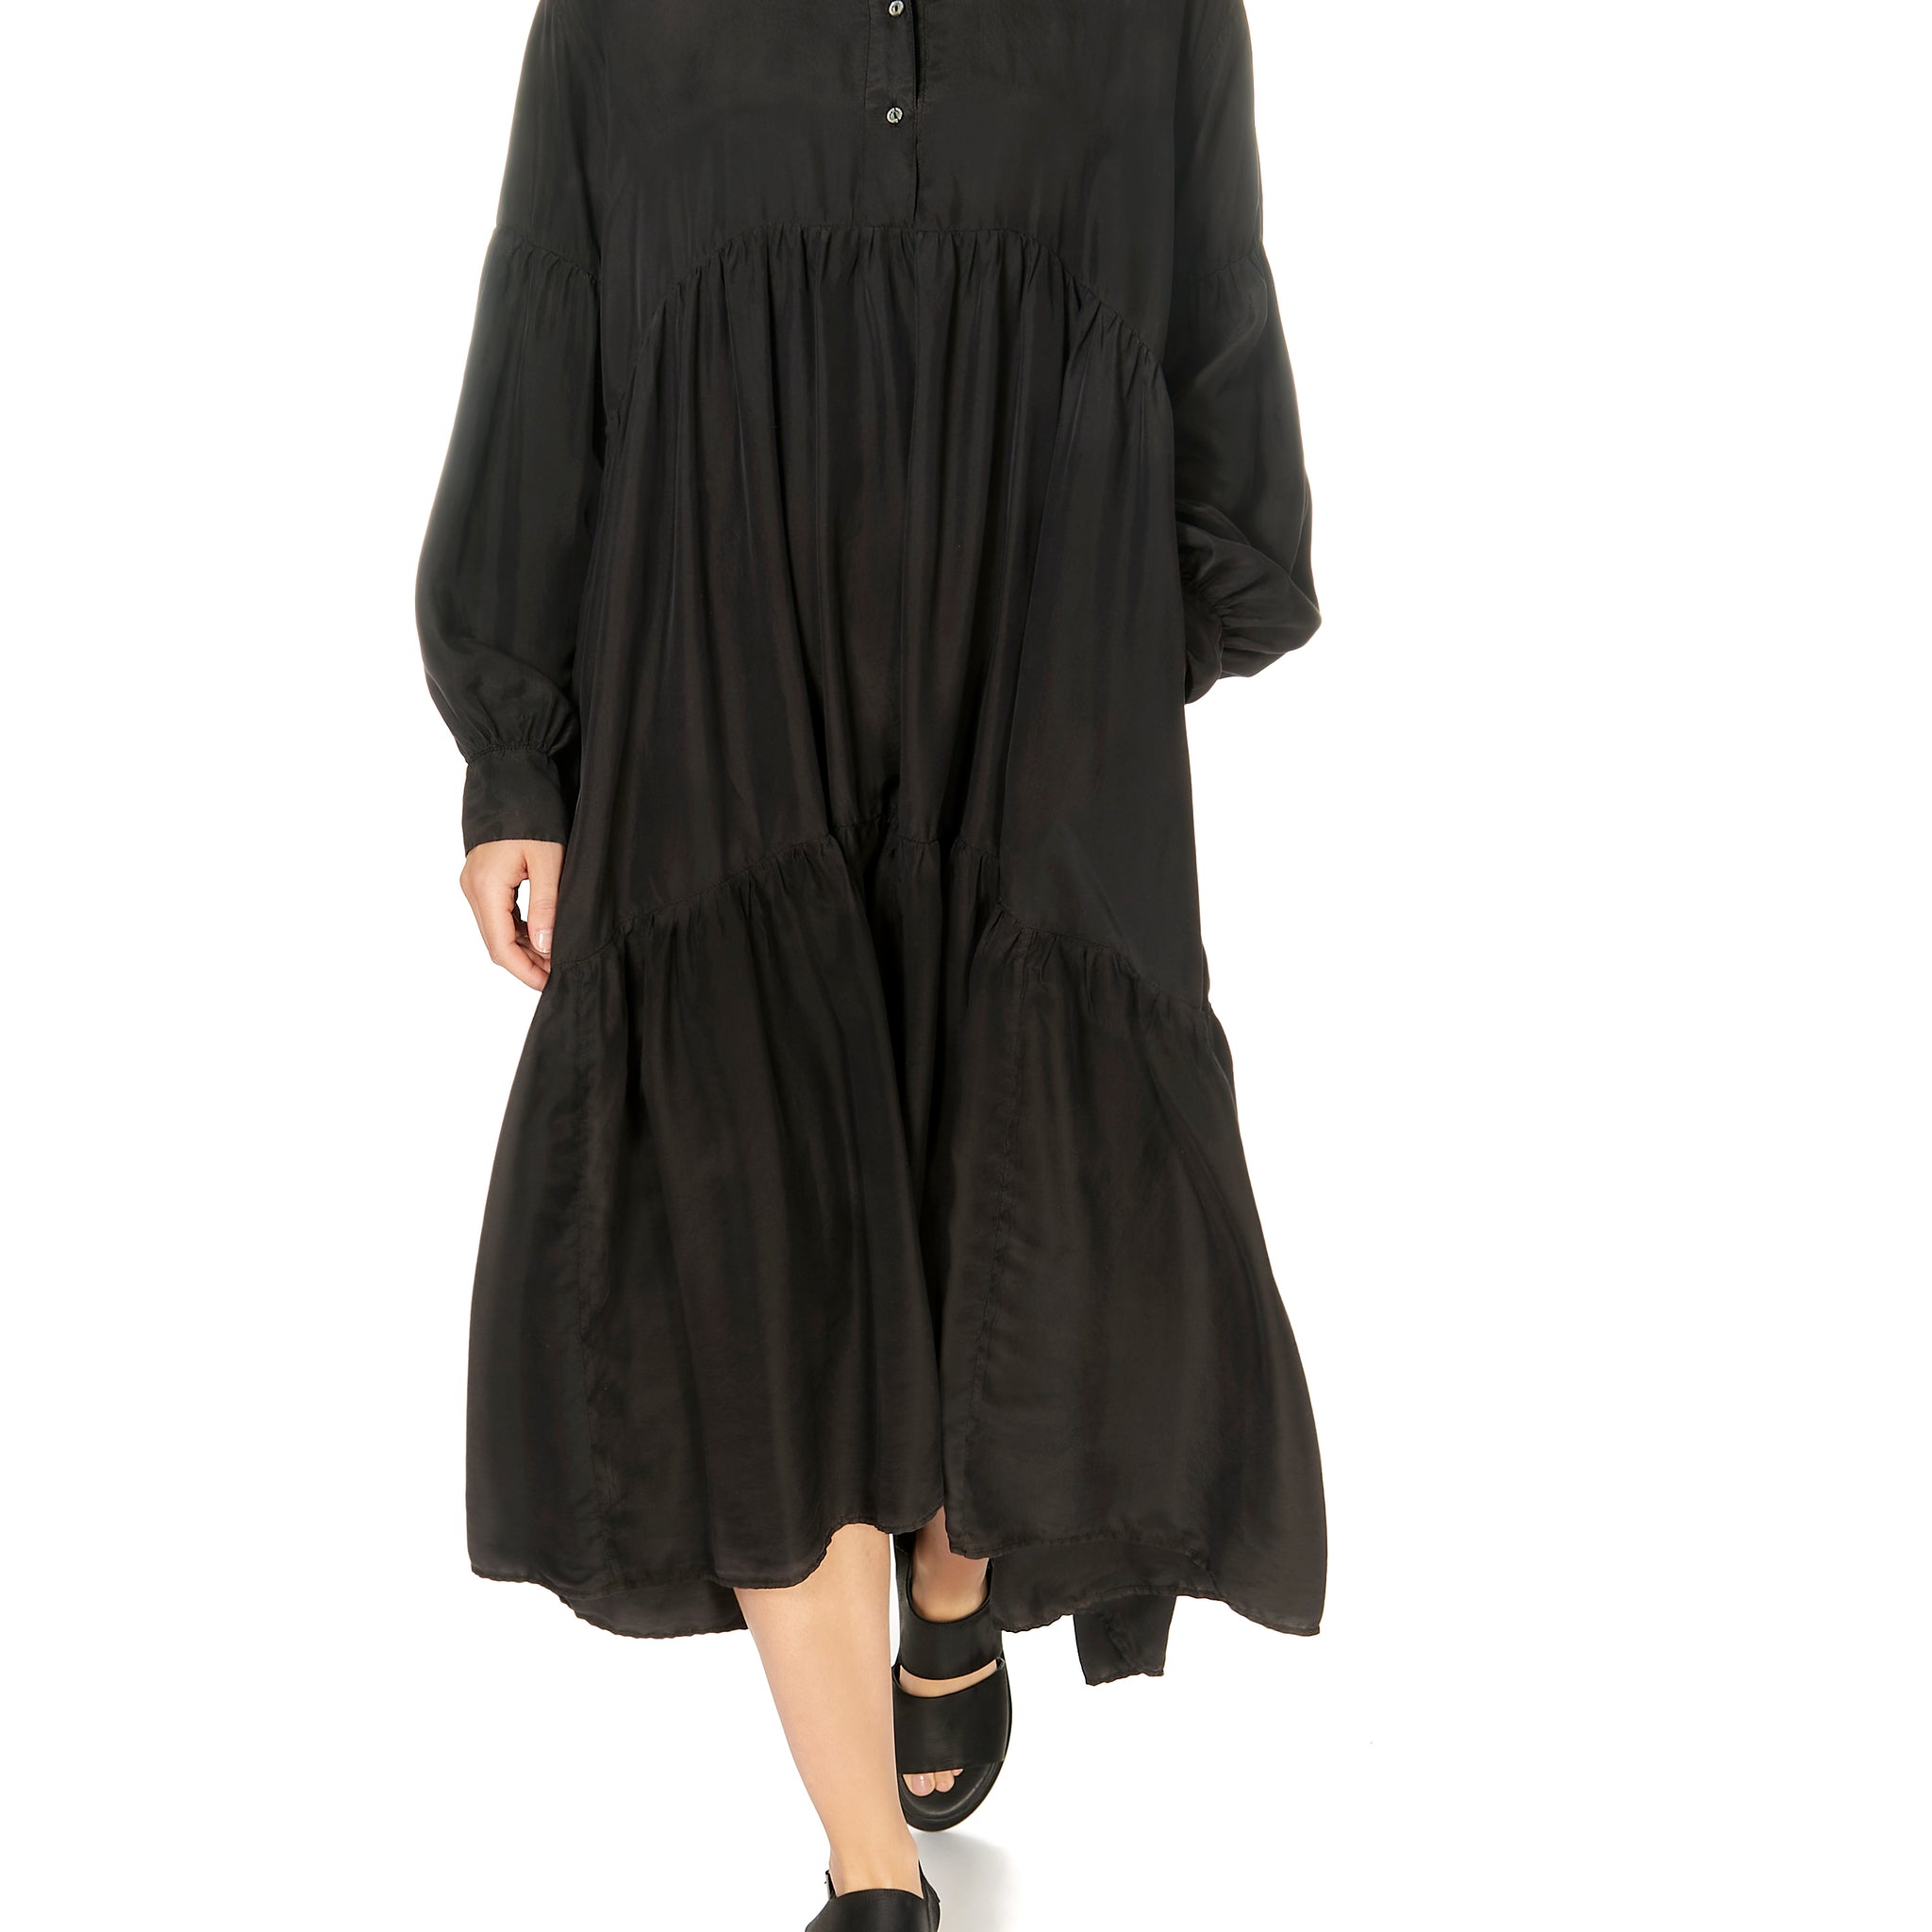 Sfizio Habotai Black Tiered Dress